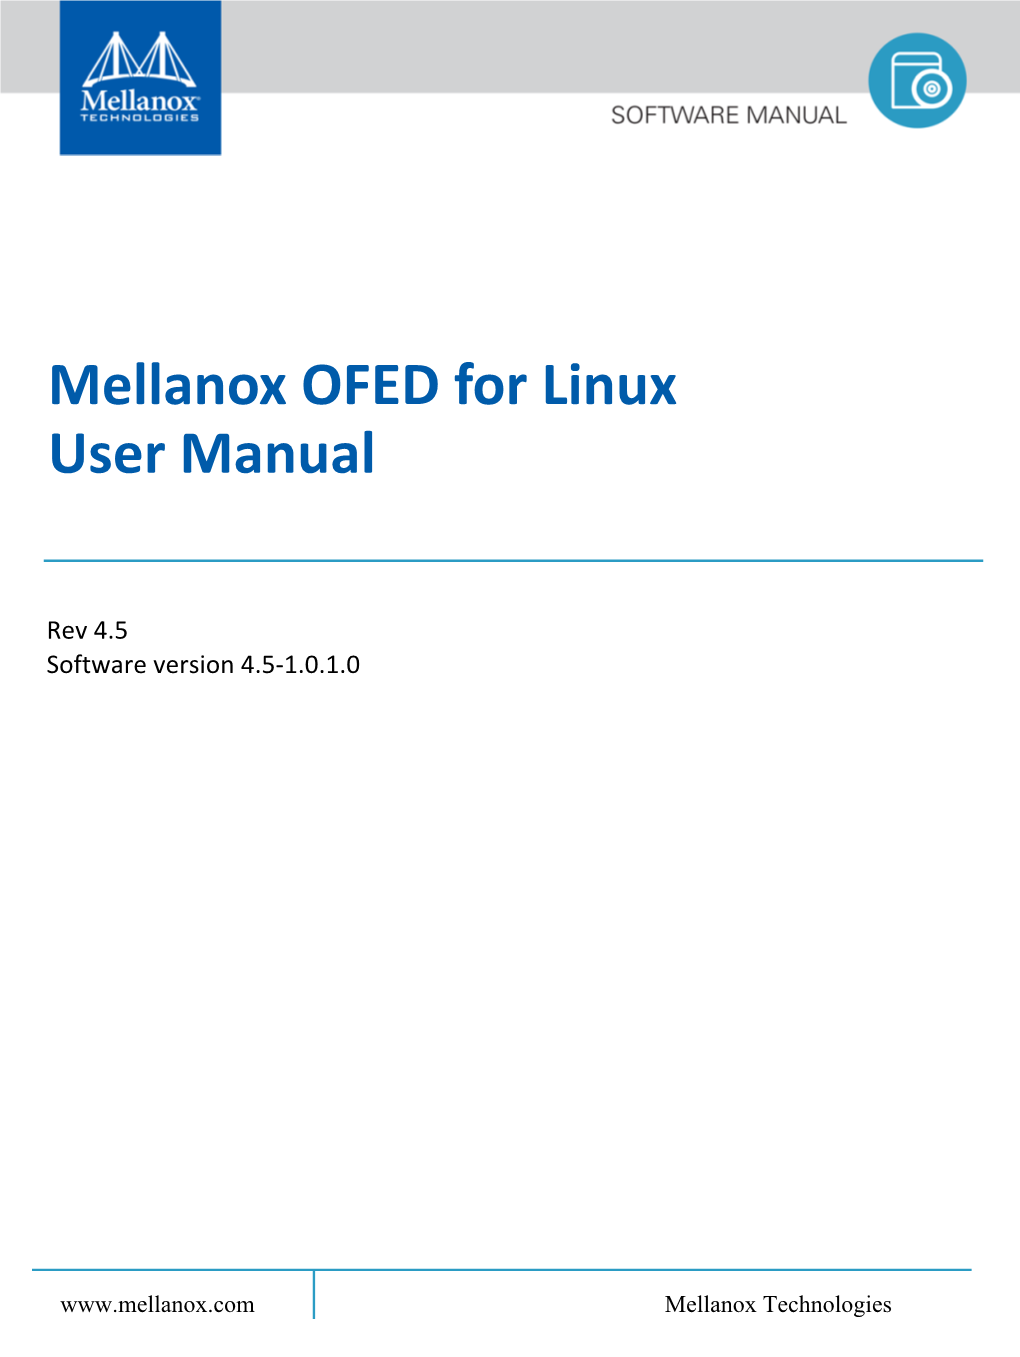 Mellanox OFED Linux User's Manual